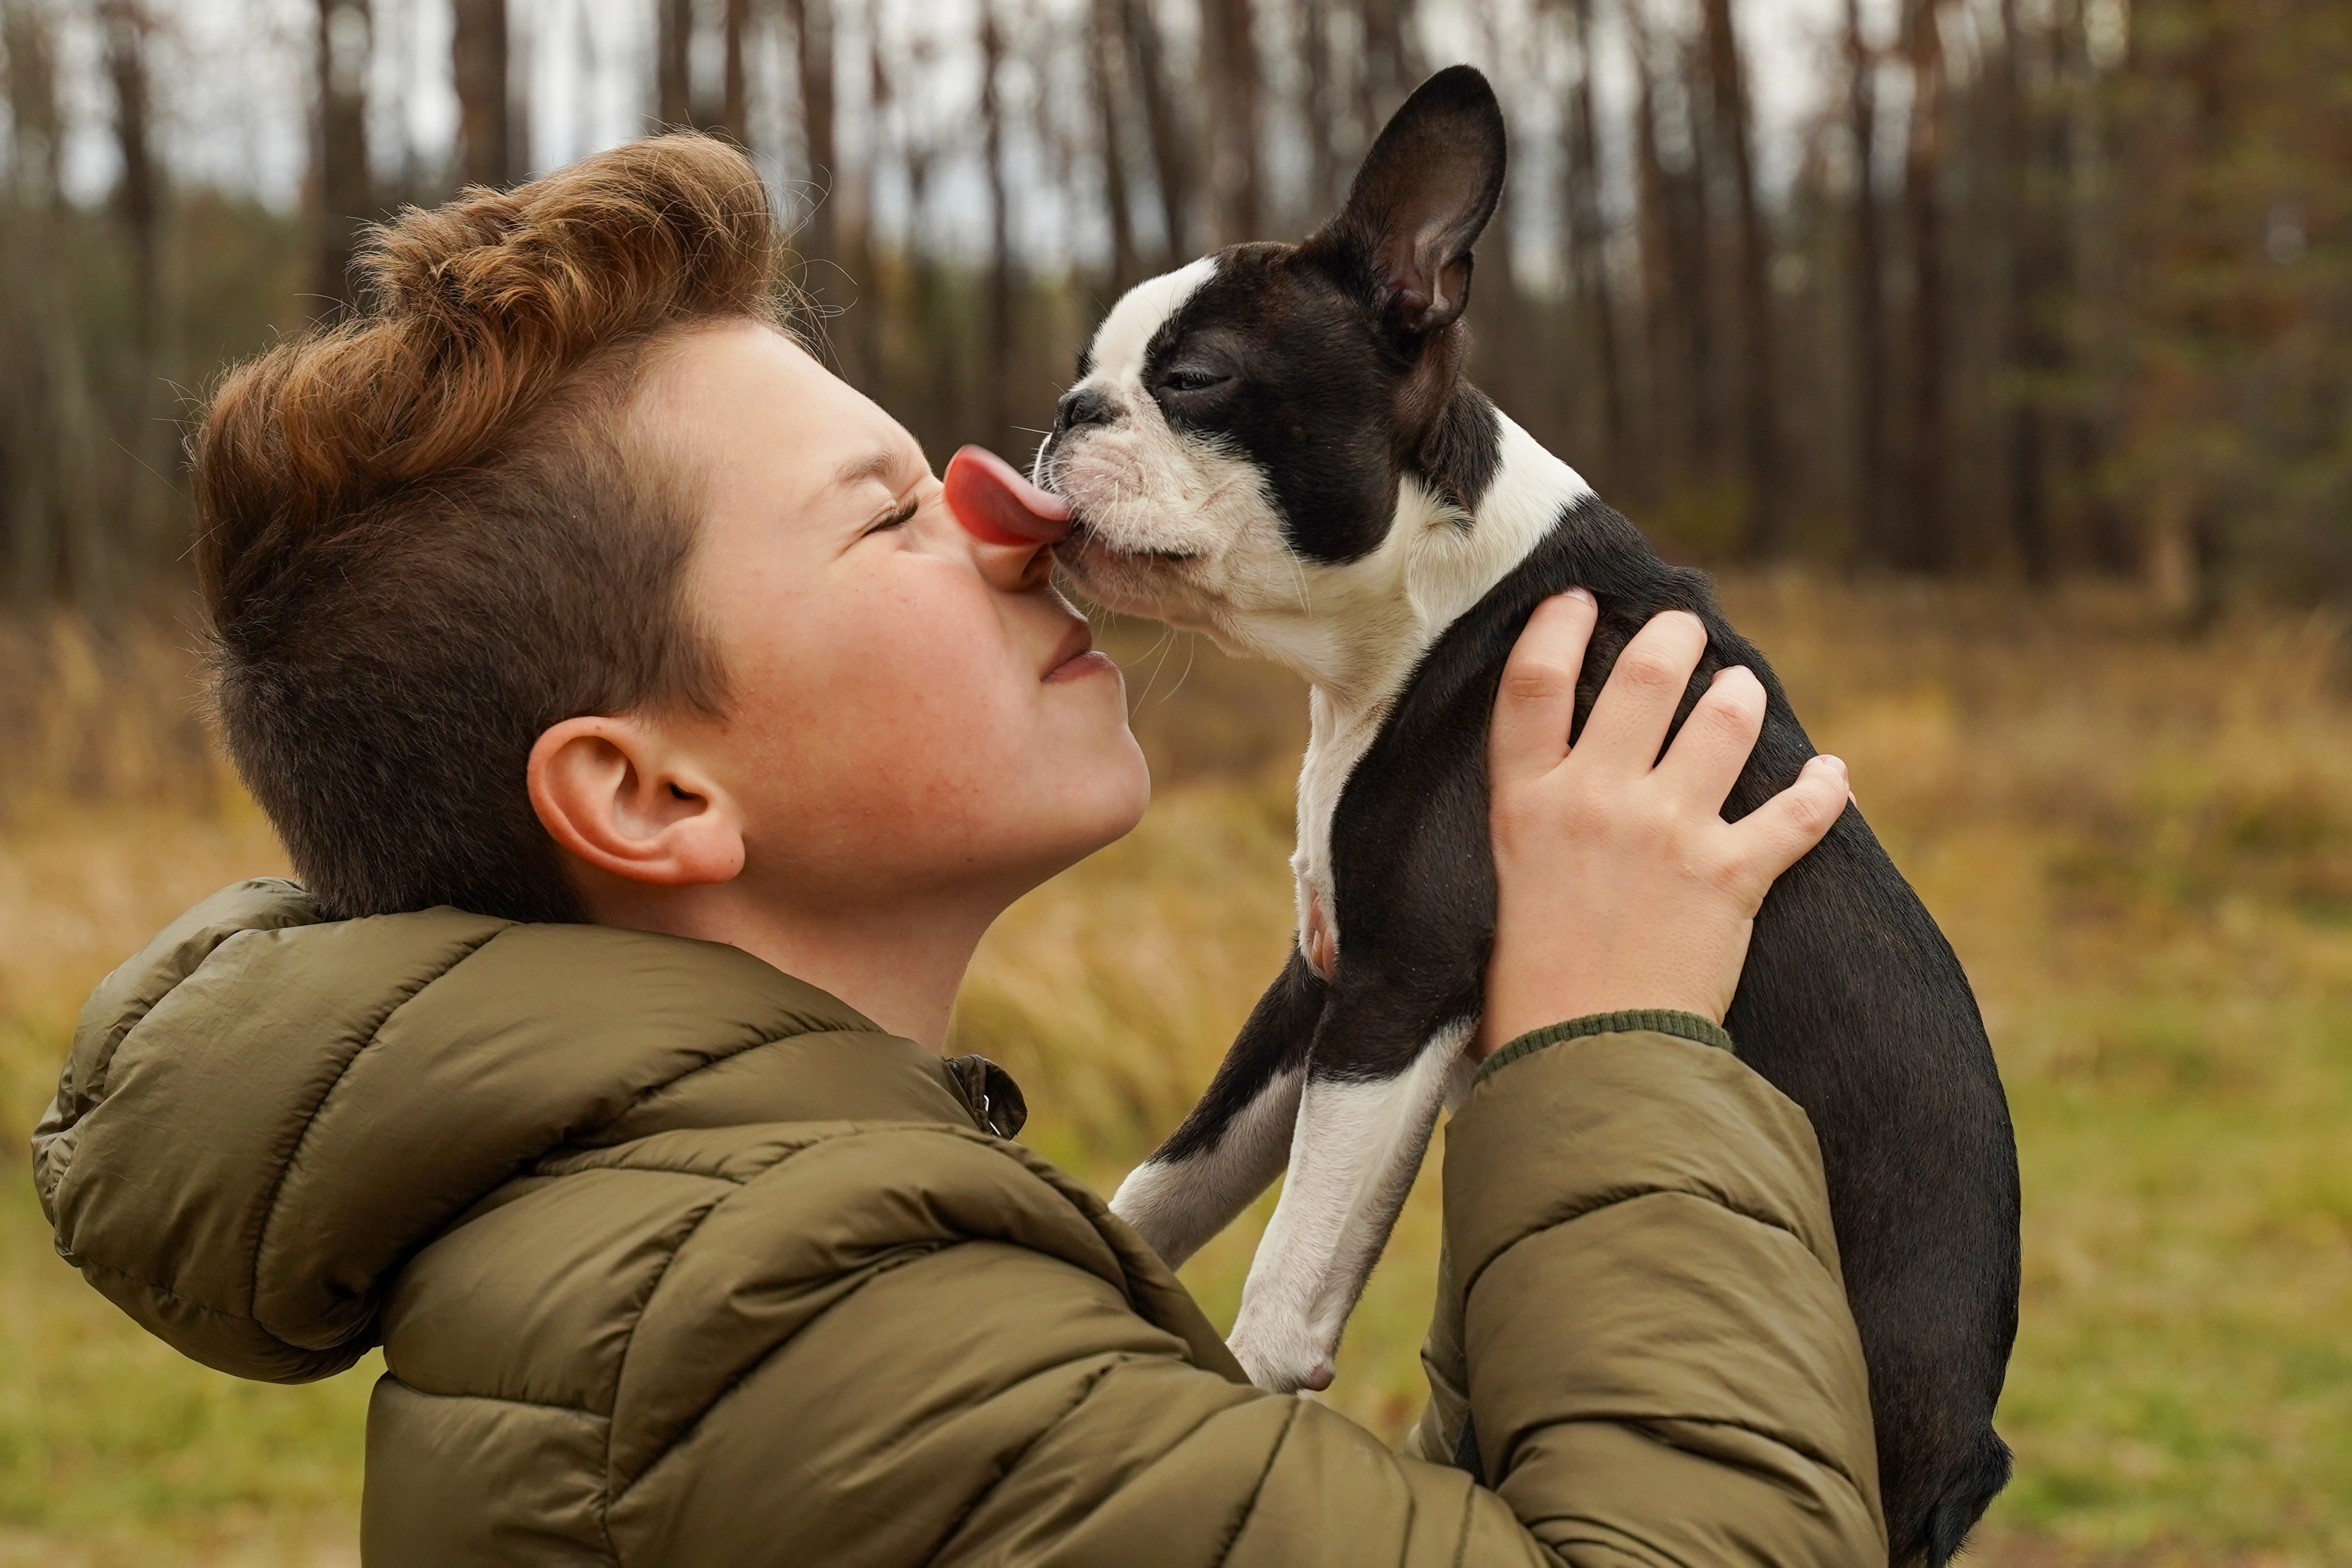 A boy kisses his beloved dog in nose | Source: Shutterstock.com